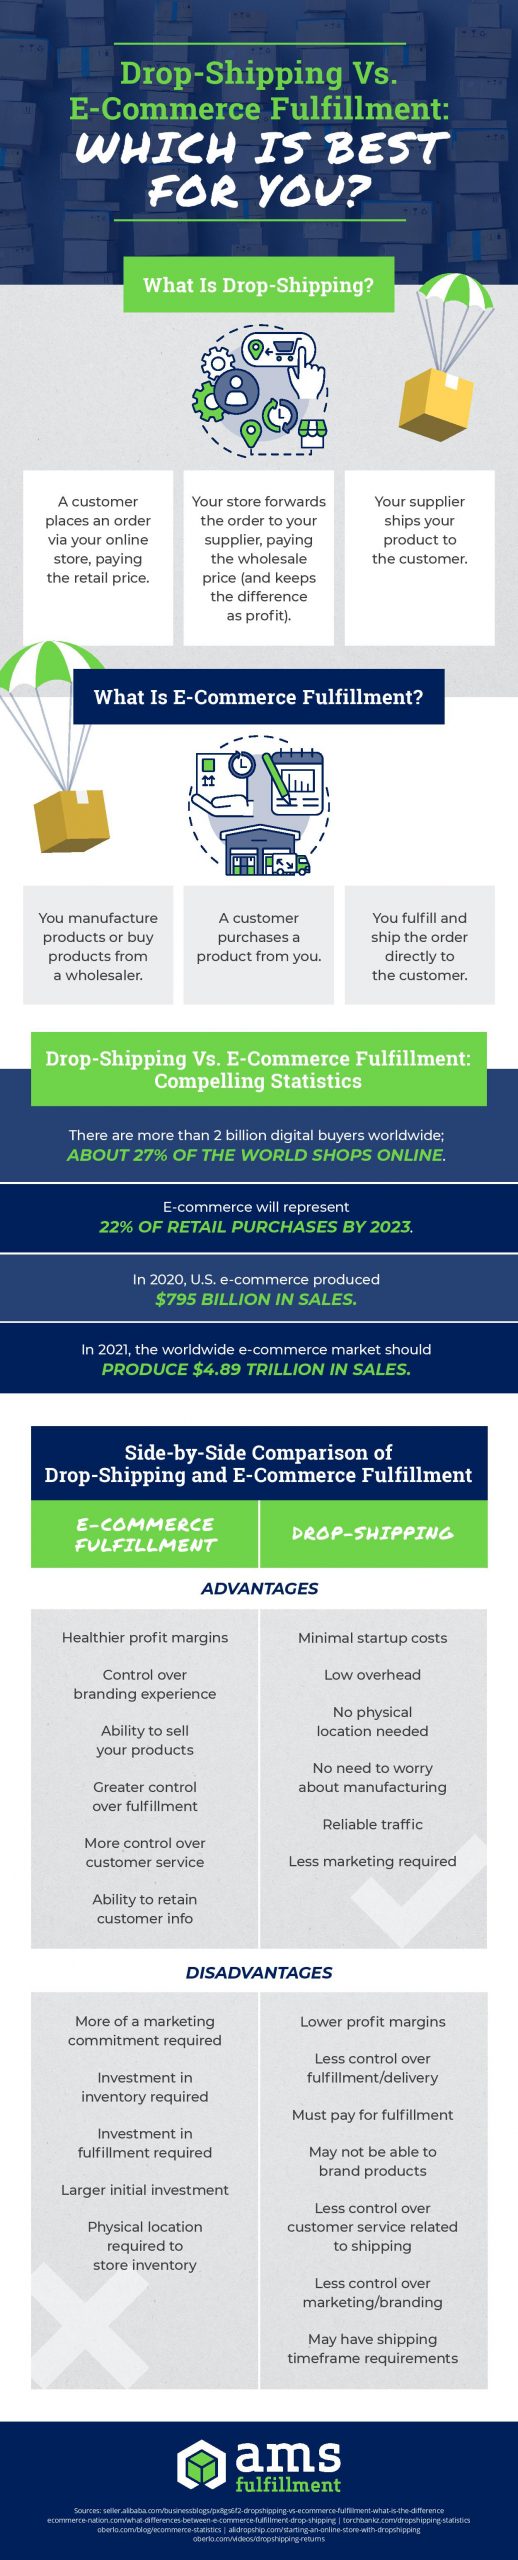 ams fulfillment drop shipping vs ecommerce fulfillment infographic